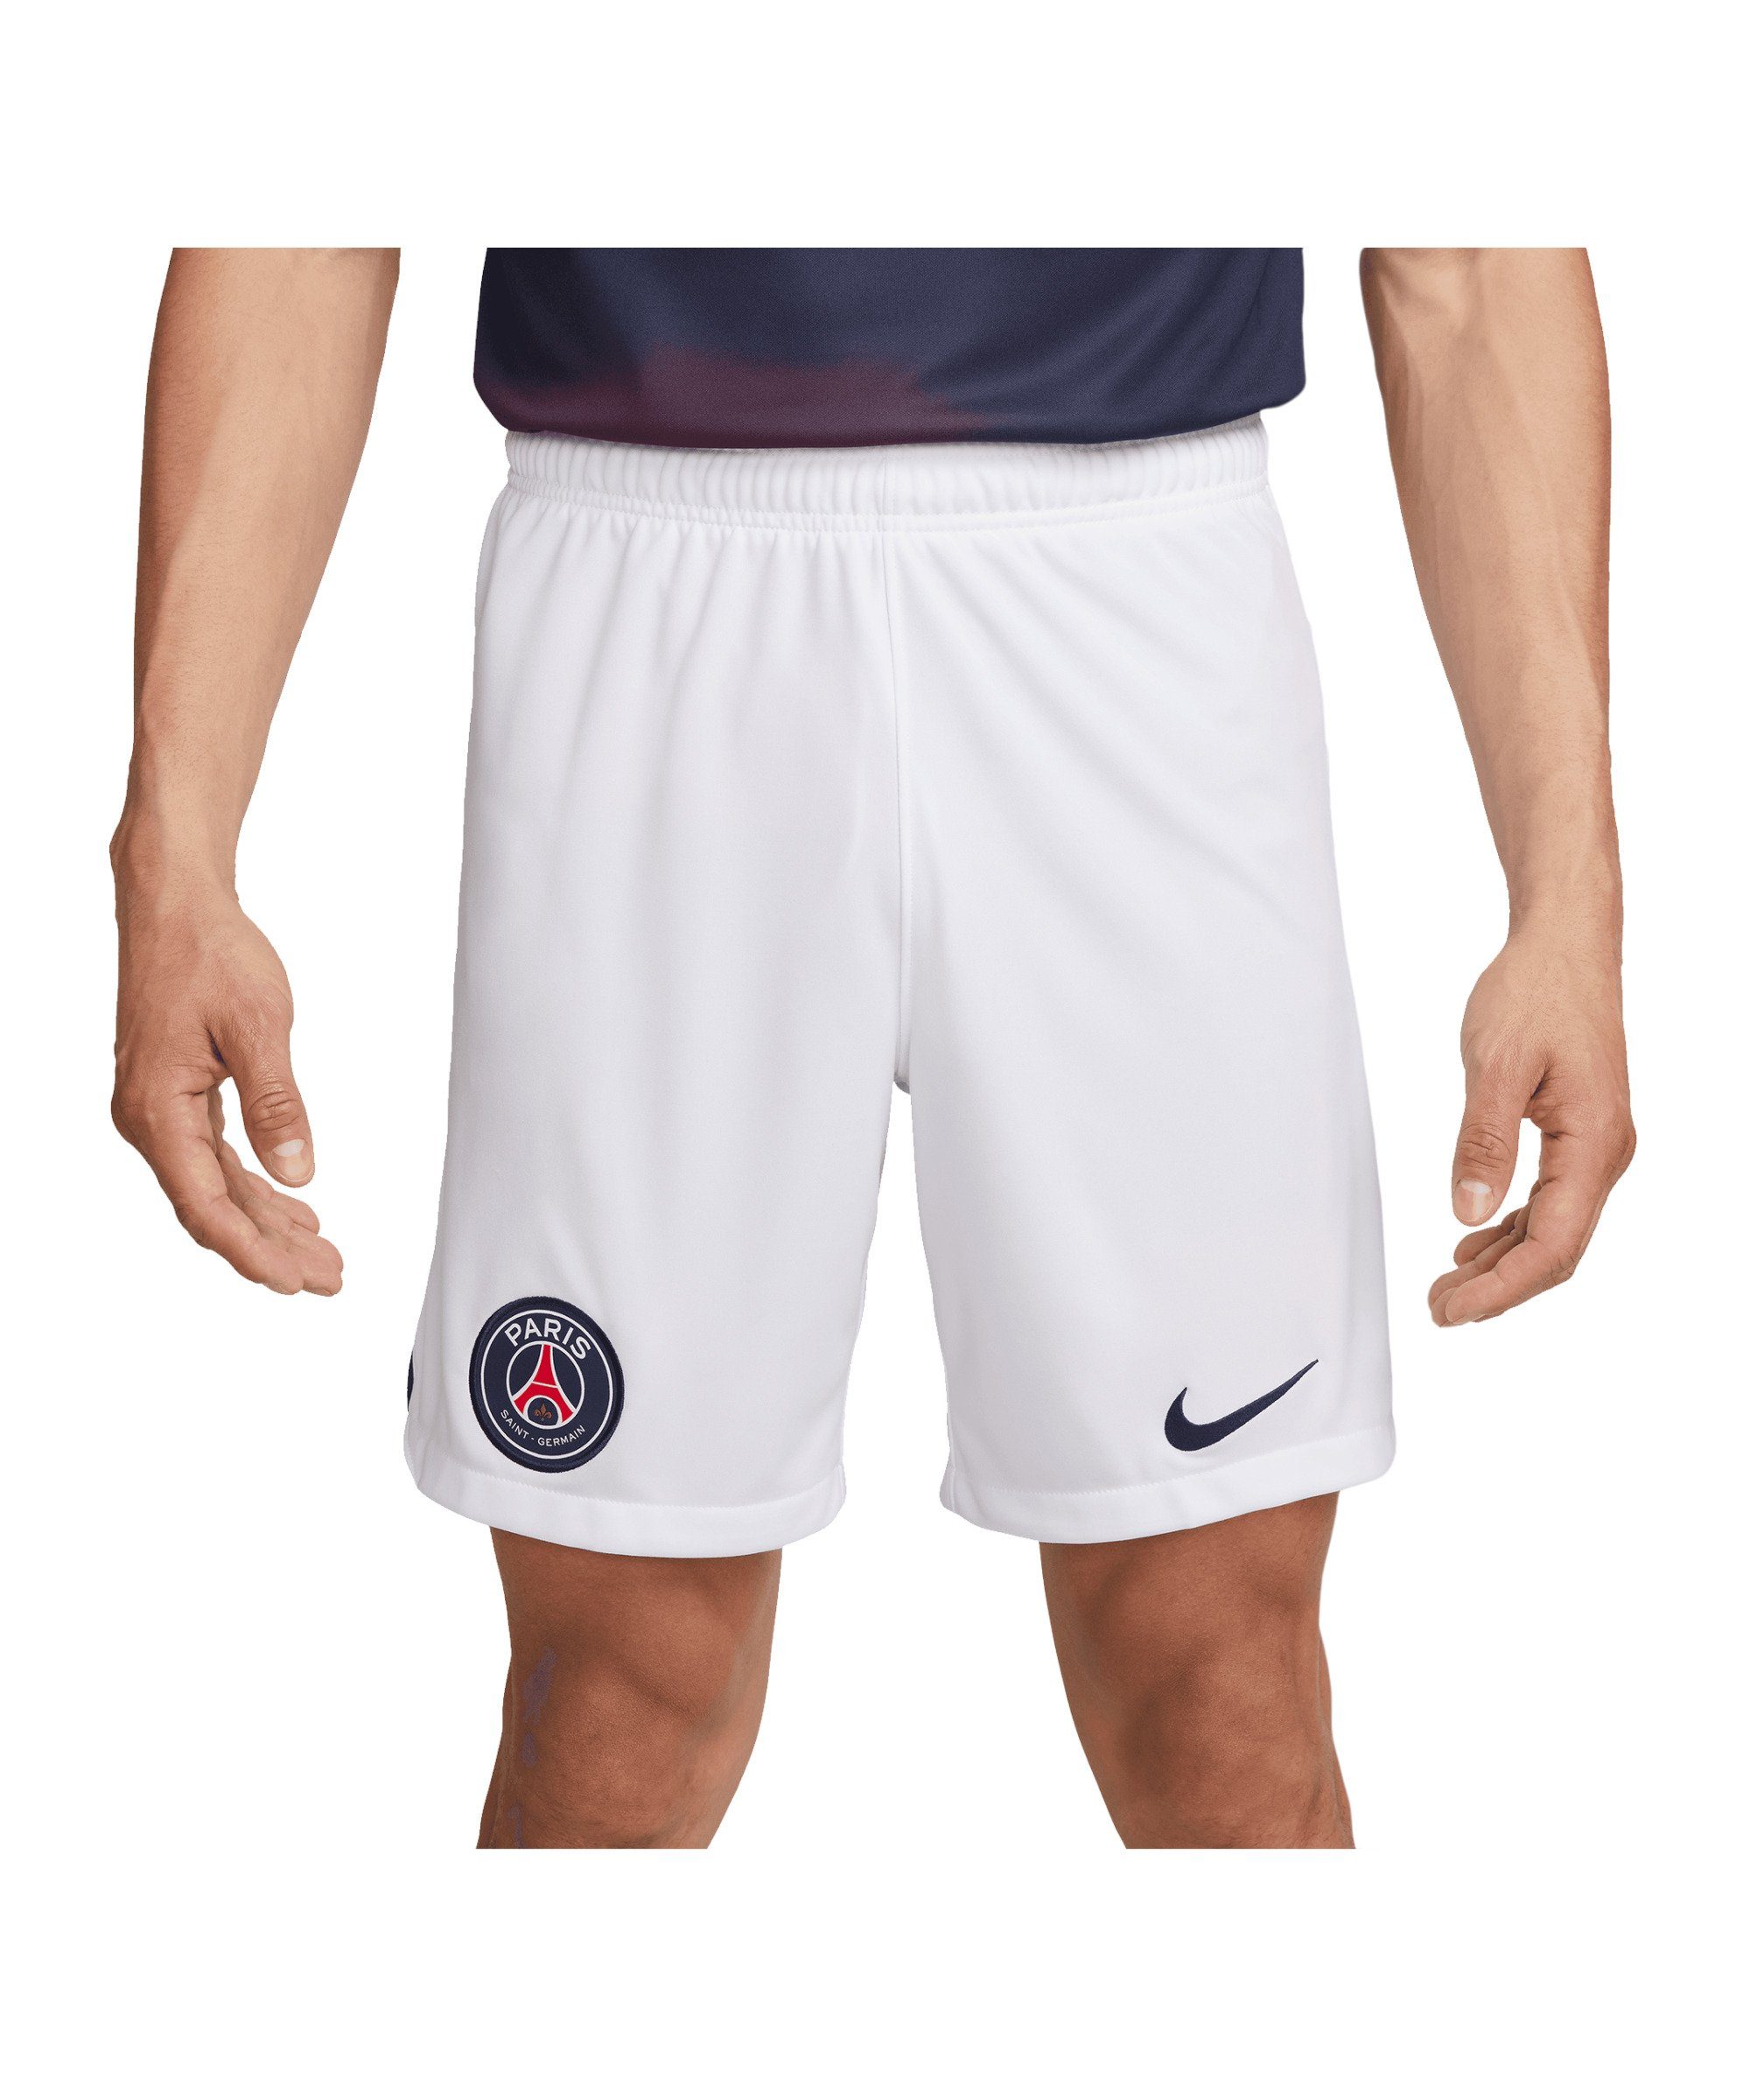 weissblaublau Sporthose Nike Away Home St. Germain 23/24 Short Paris